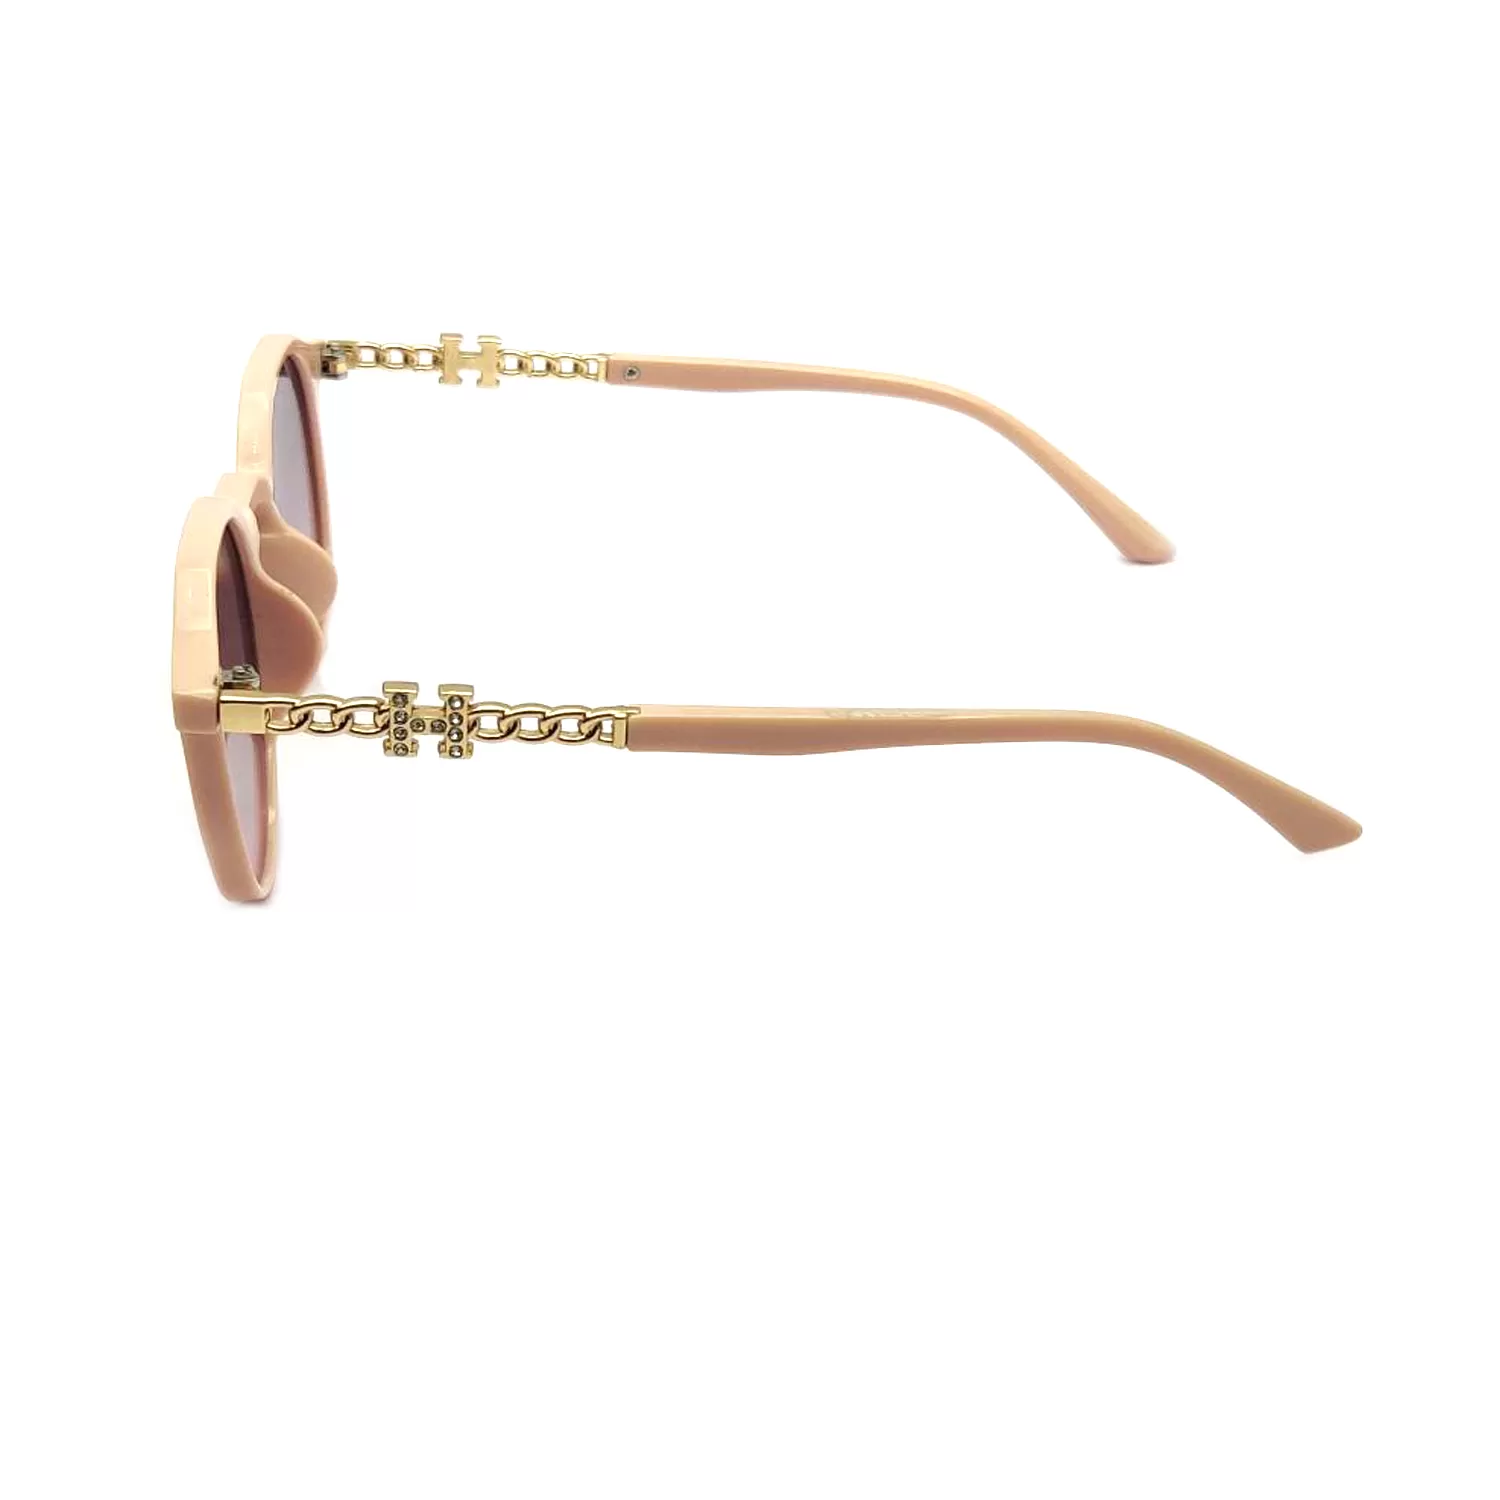 buy designer sunglasses online at chashmah.com